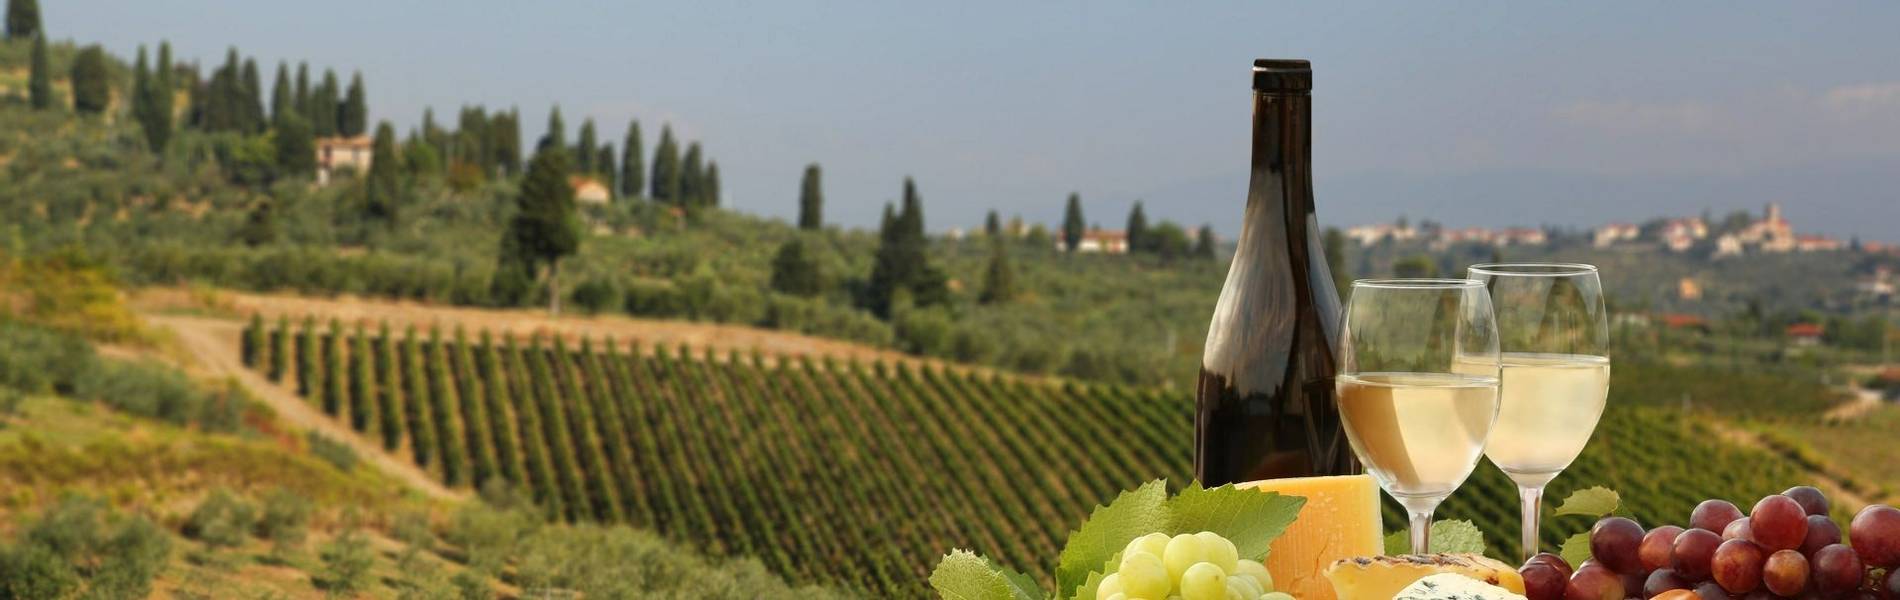 Tuscany and wine .jpg